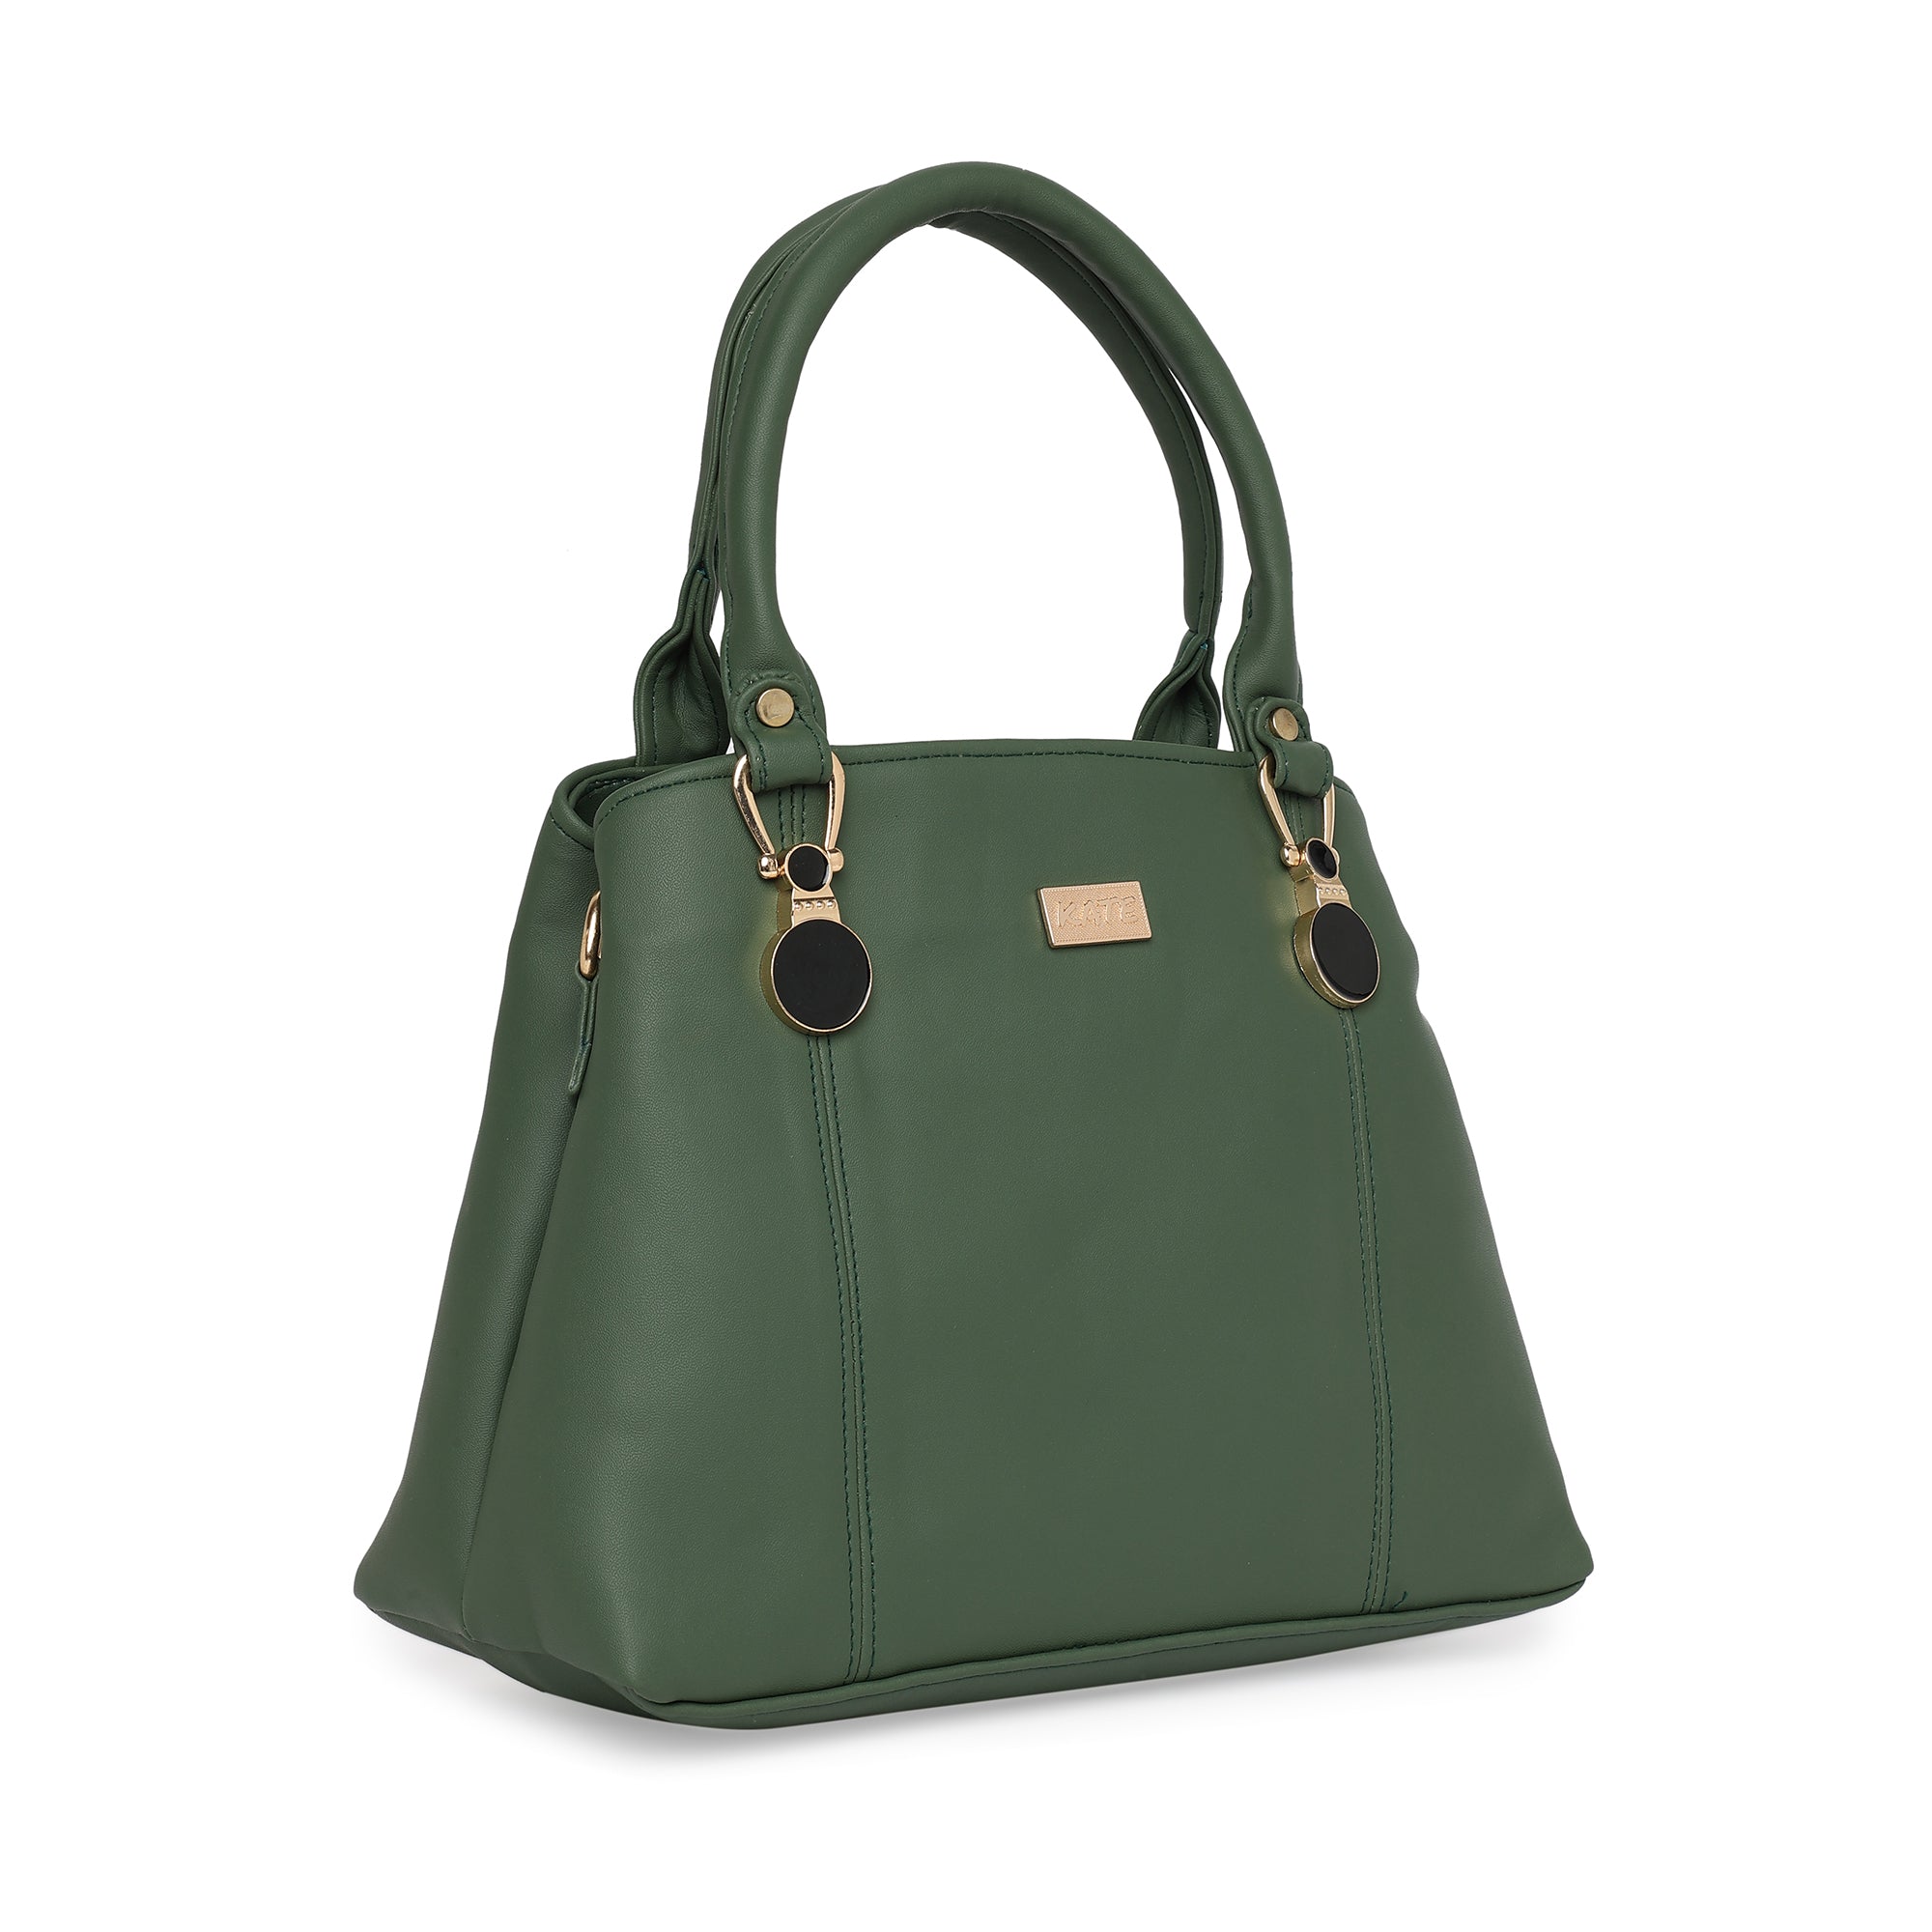 Daniela Moda Vera Pelle Women's Green Genuine Leather Hand Bag Clutch Purse  | eBay